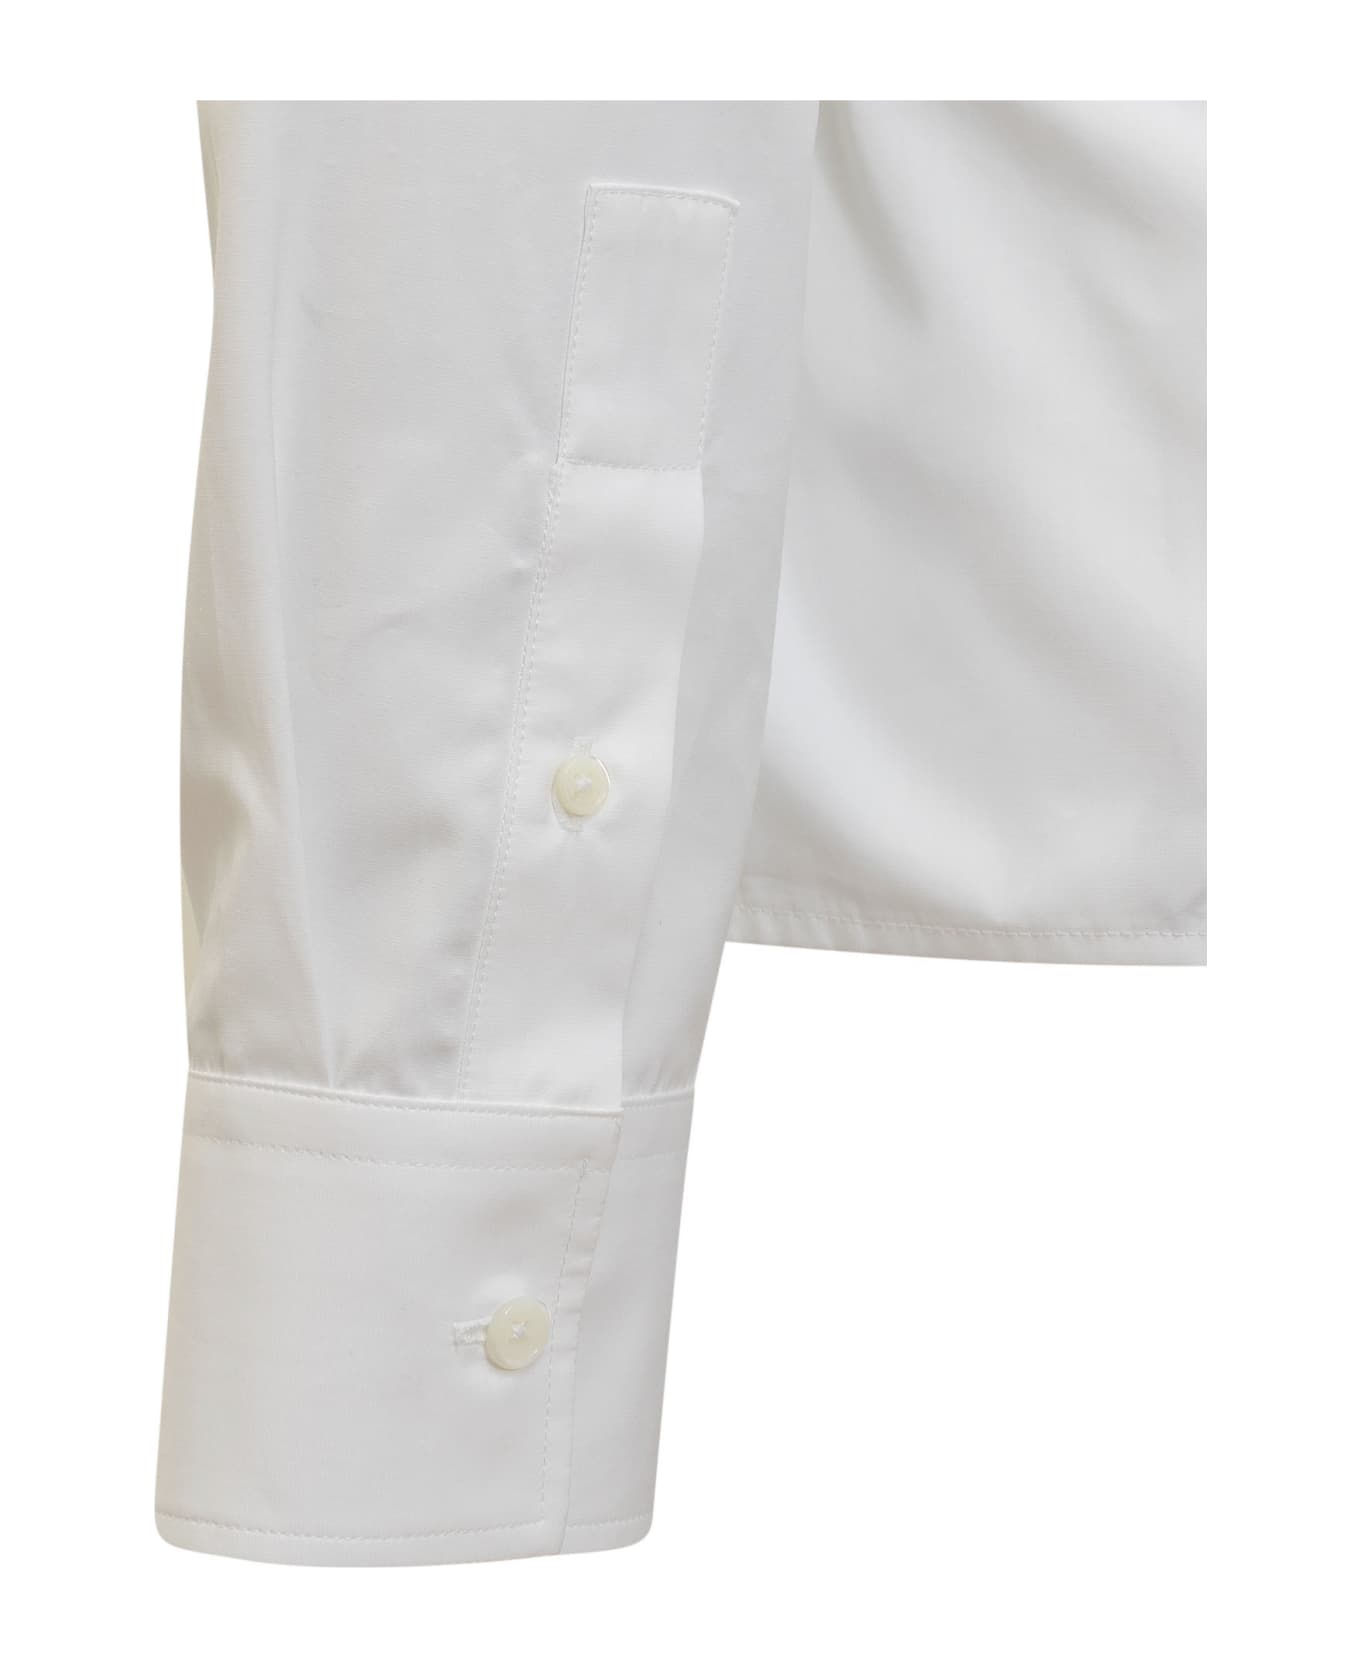 Off-White Popeline Shirt - WHITE シャツ